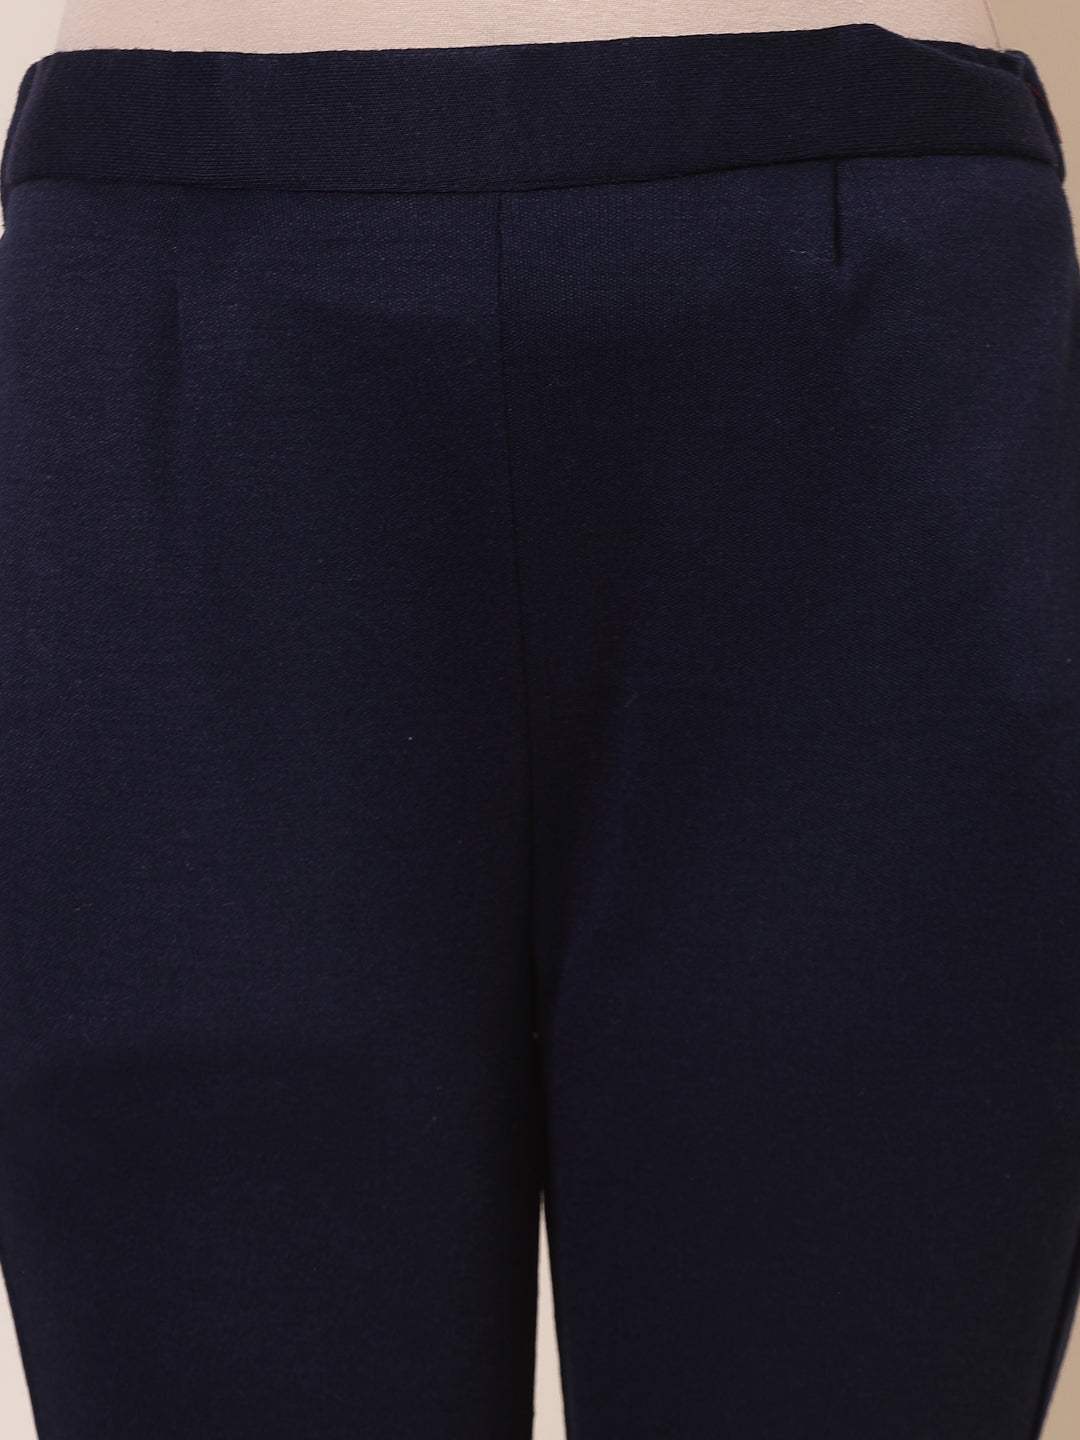 Maroon & Navy Blue Solid Woollen Trouser (Pack of 2)